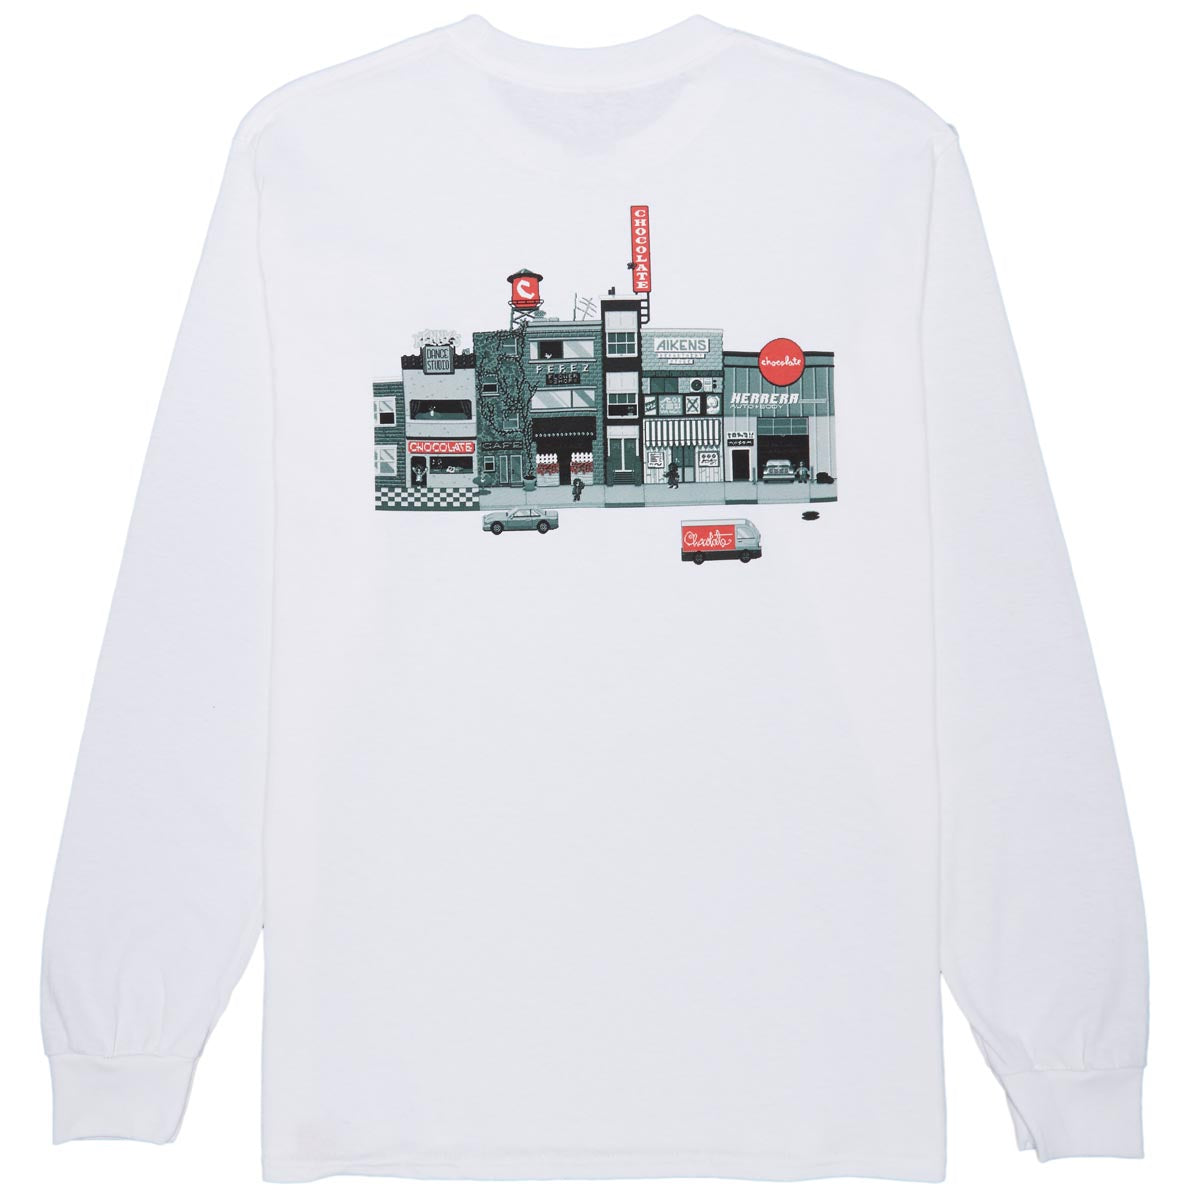 Chocolate Pixel City Long Sleeve T-Shirt - White image 1